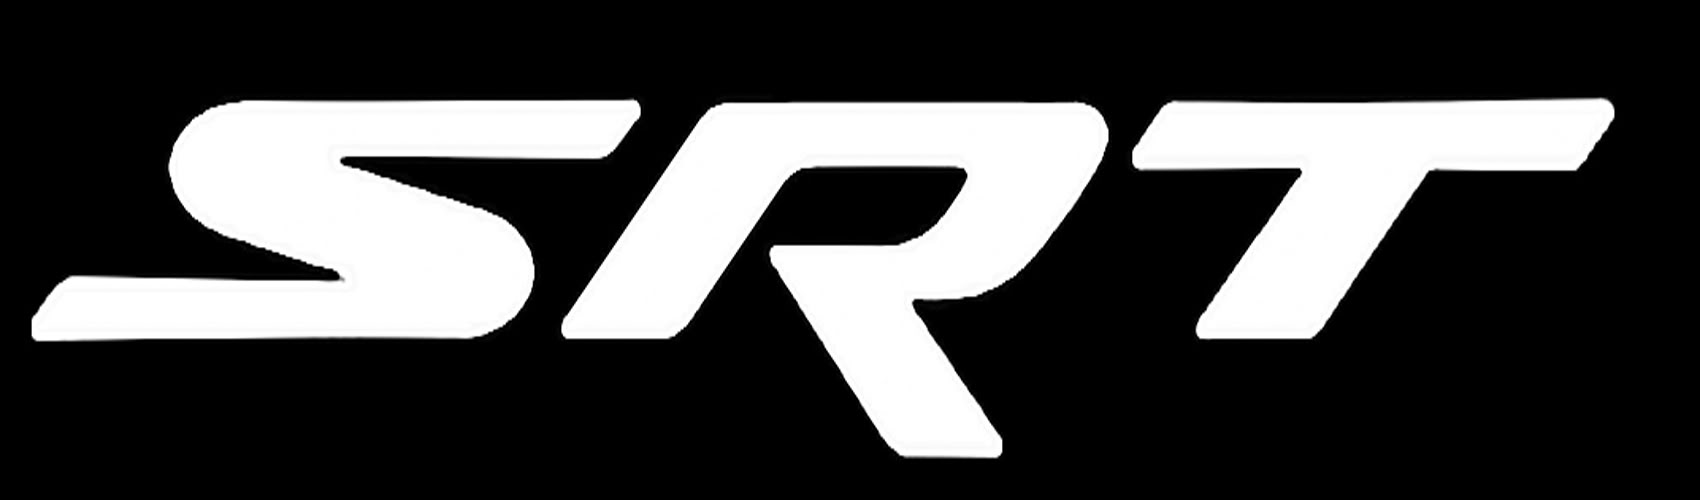 SRT Logo   Page 5   Dodge Charger Forums 1700x500